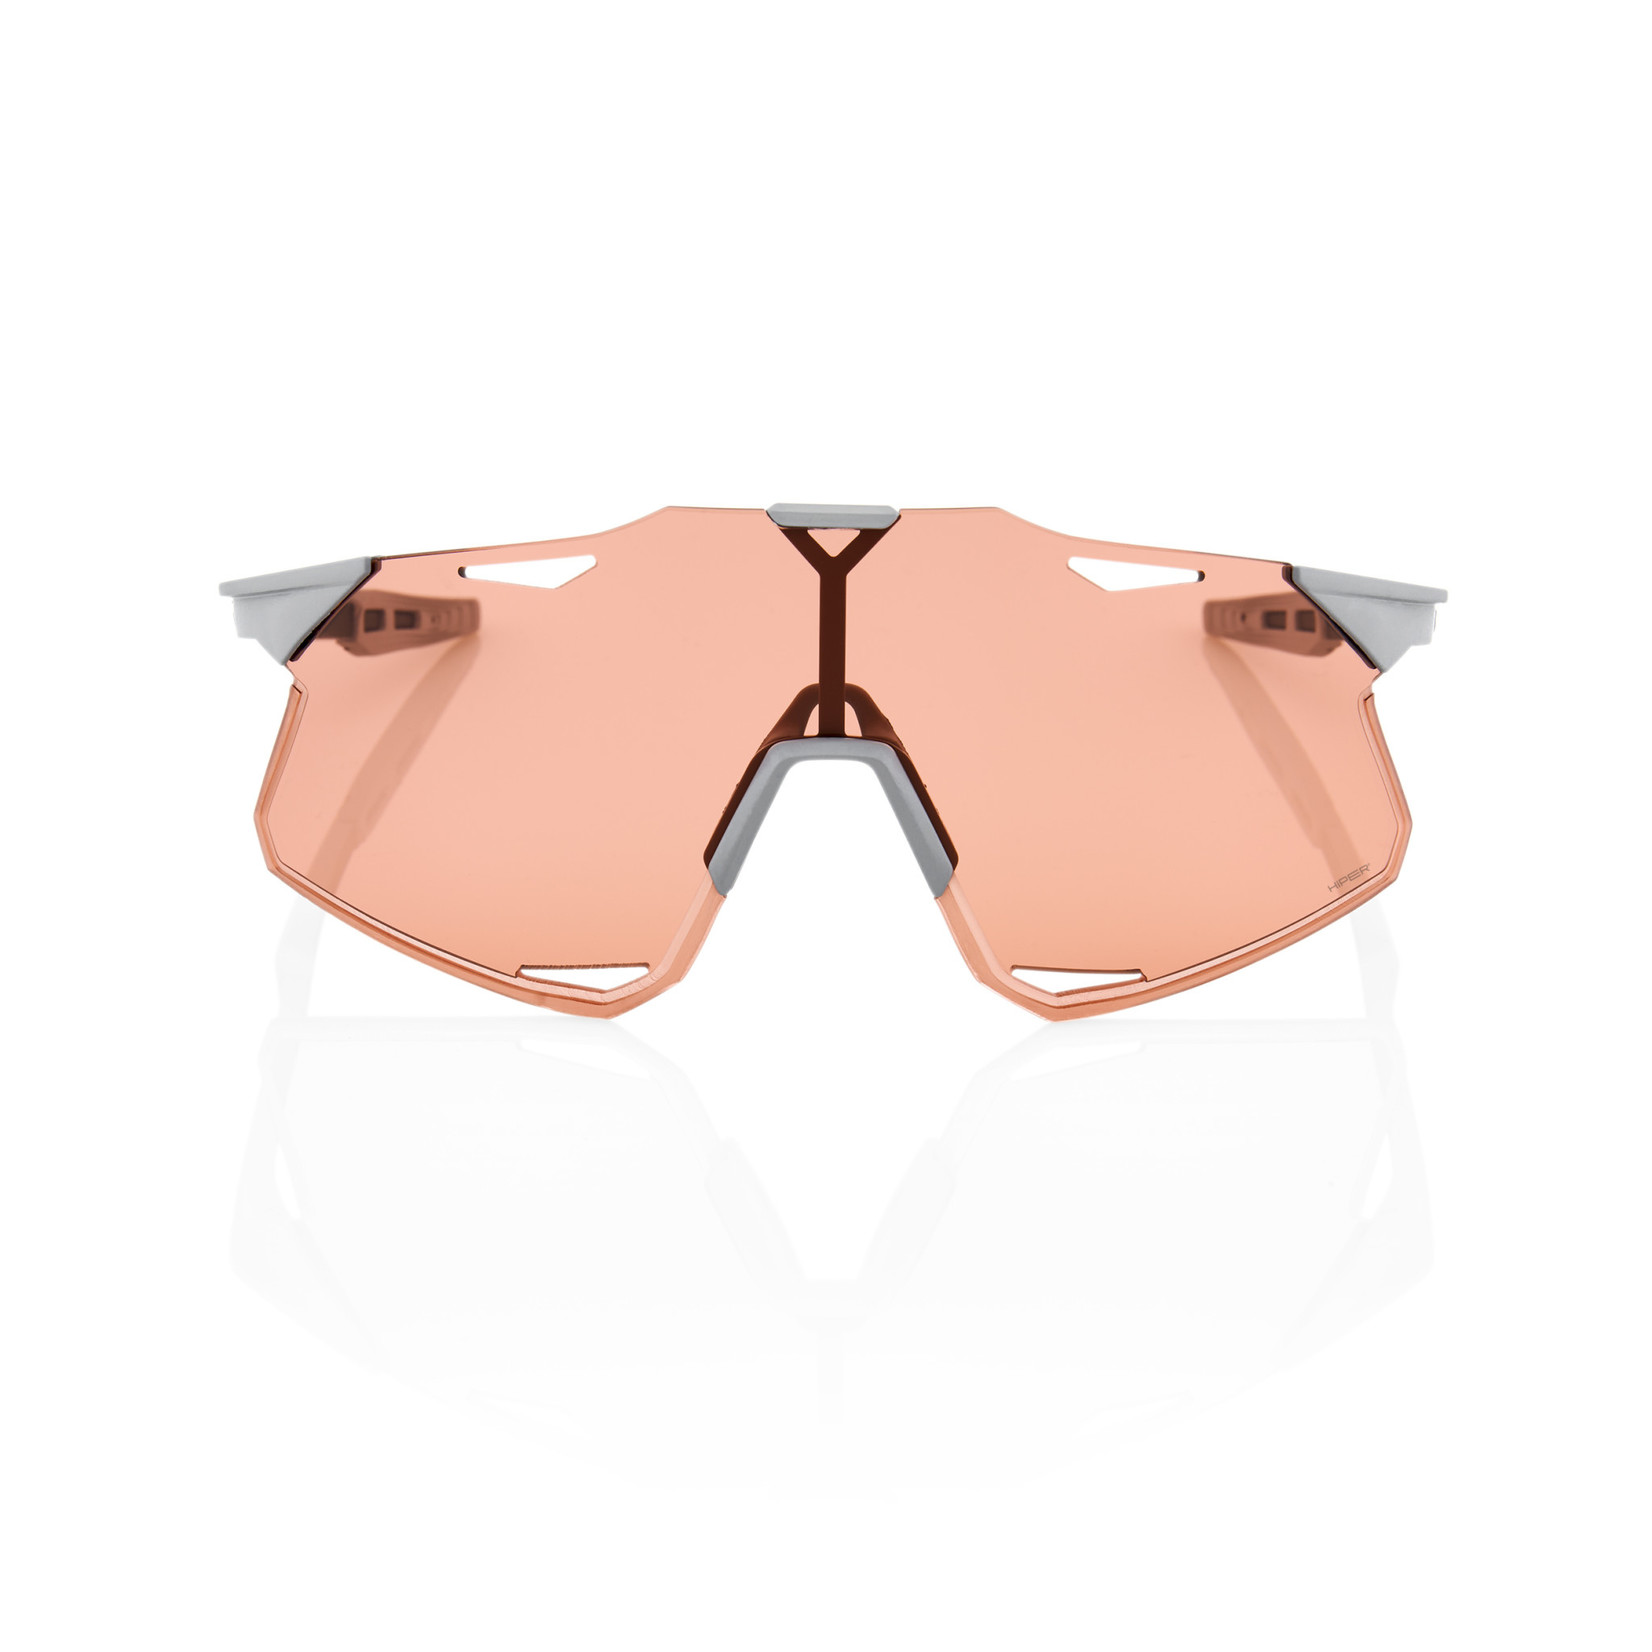 100 Percent 100% Hypercraft Bike Eyewear - Matte Stone Grey - Hiper Coral